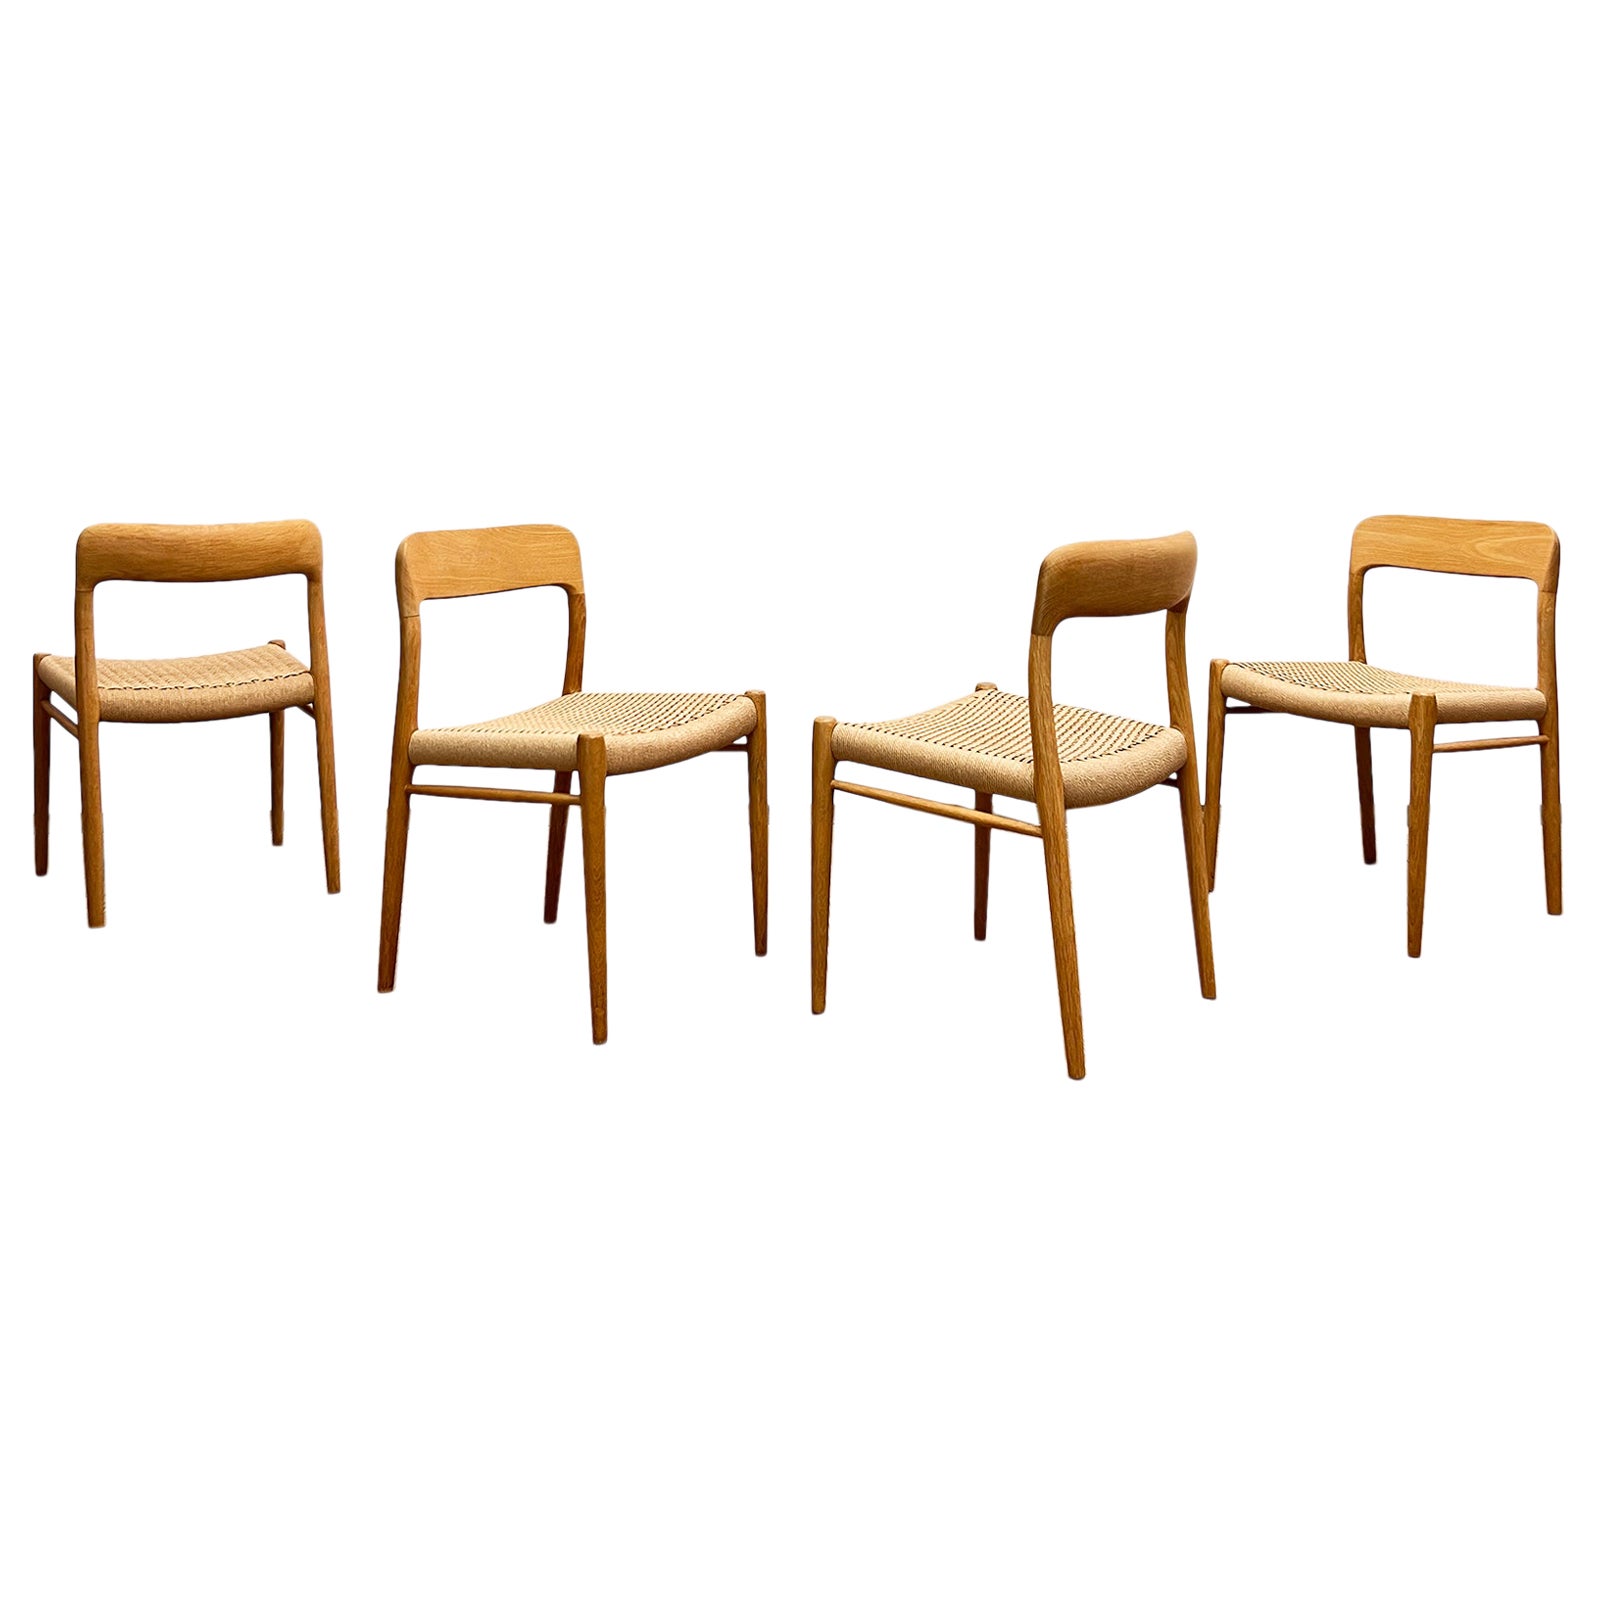 4 Danish Mid-Century Modern Oak Dining Chairs #75, Niels O. Møller, J. L. Moller For Sale